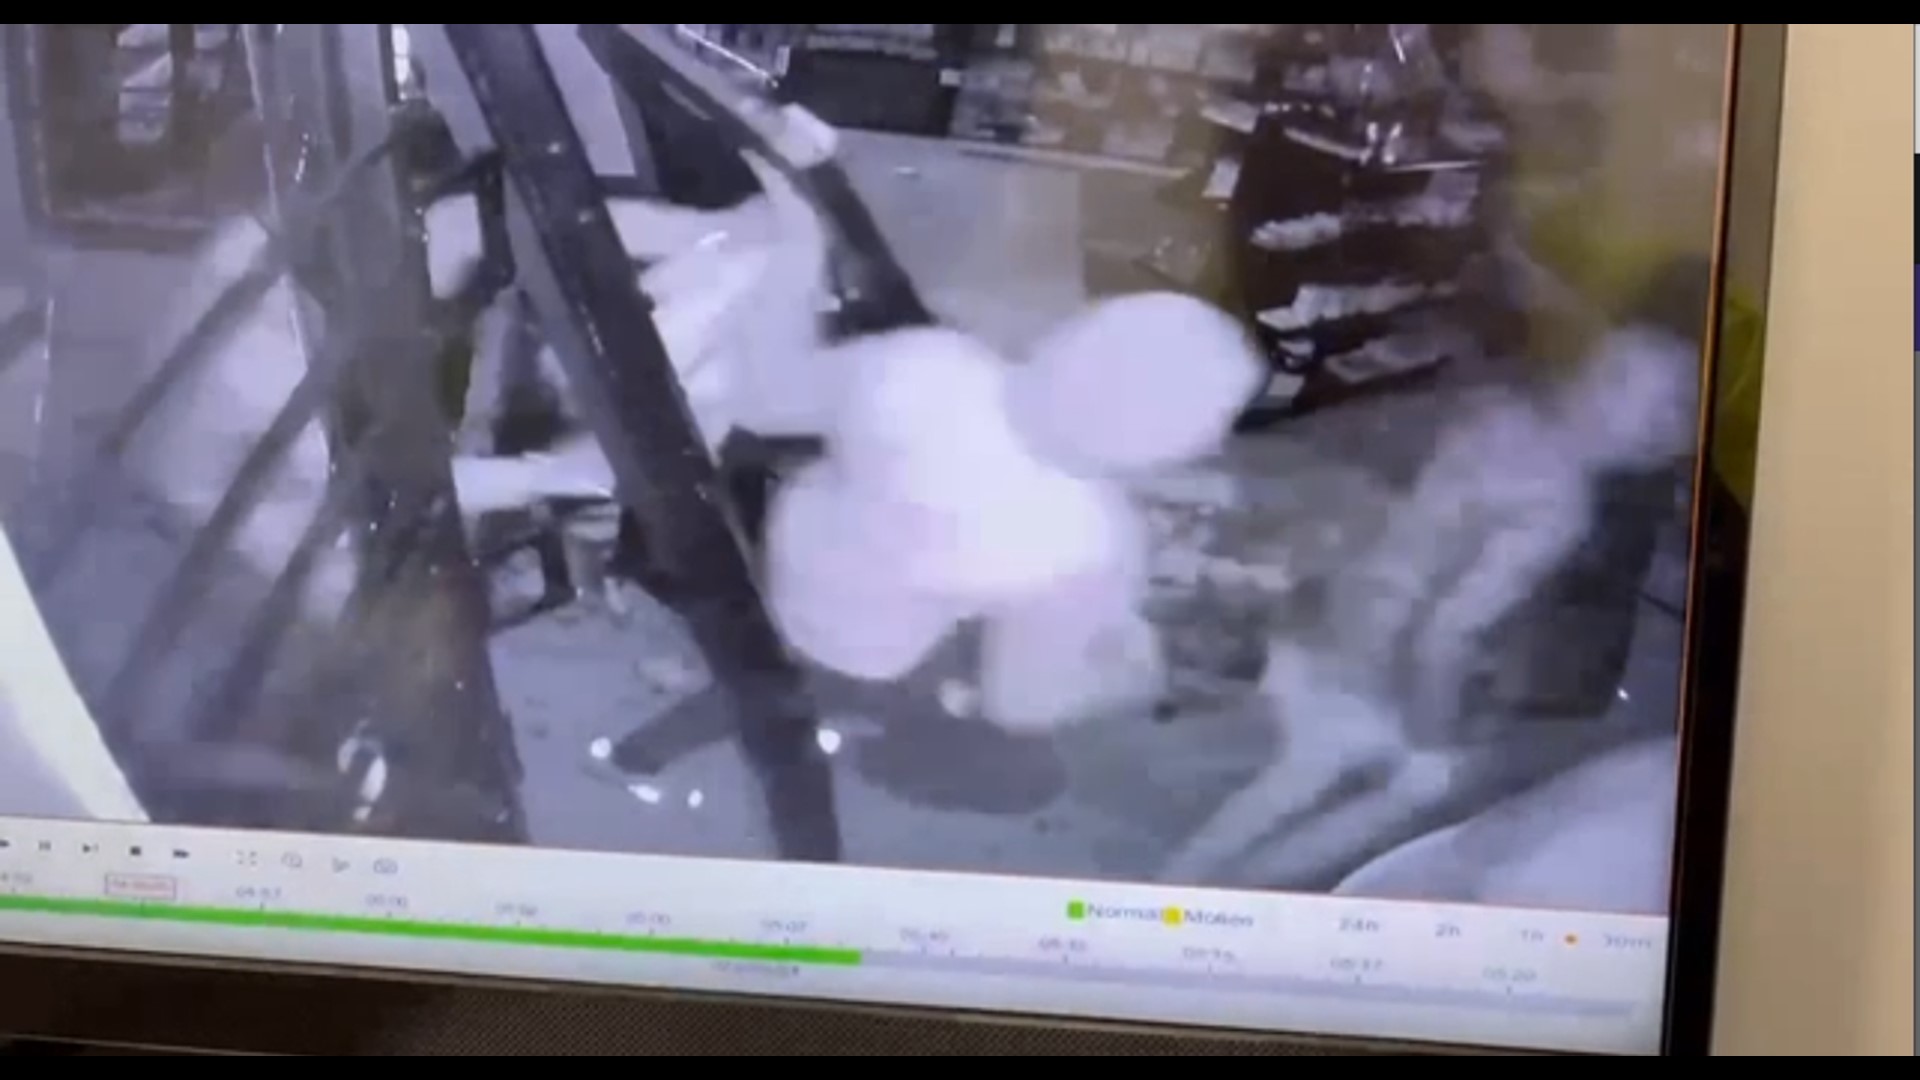 Surveillance video of smash and grab burglary at Southington (credit to Land Smoke Shop)